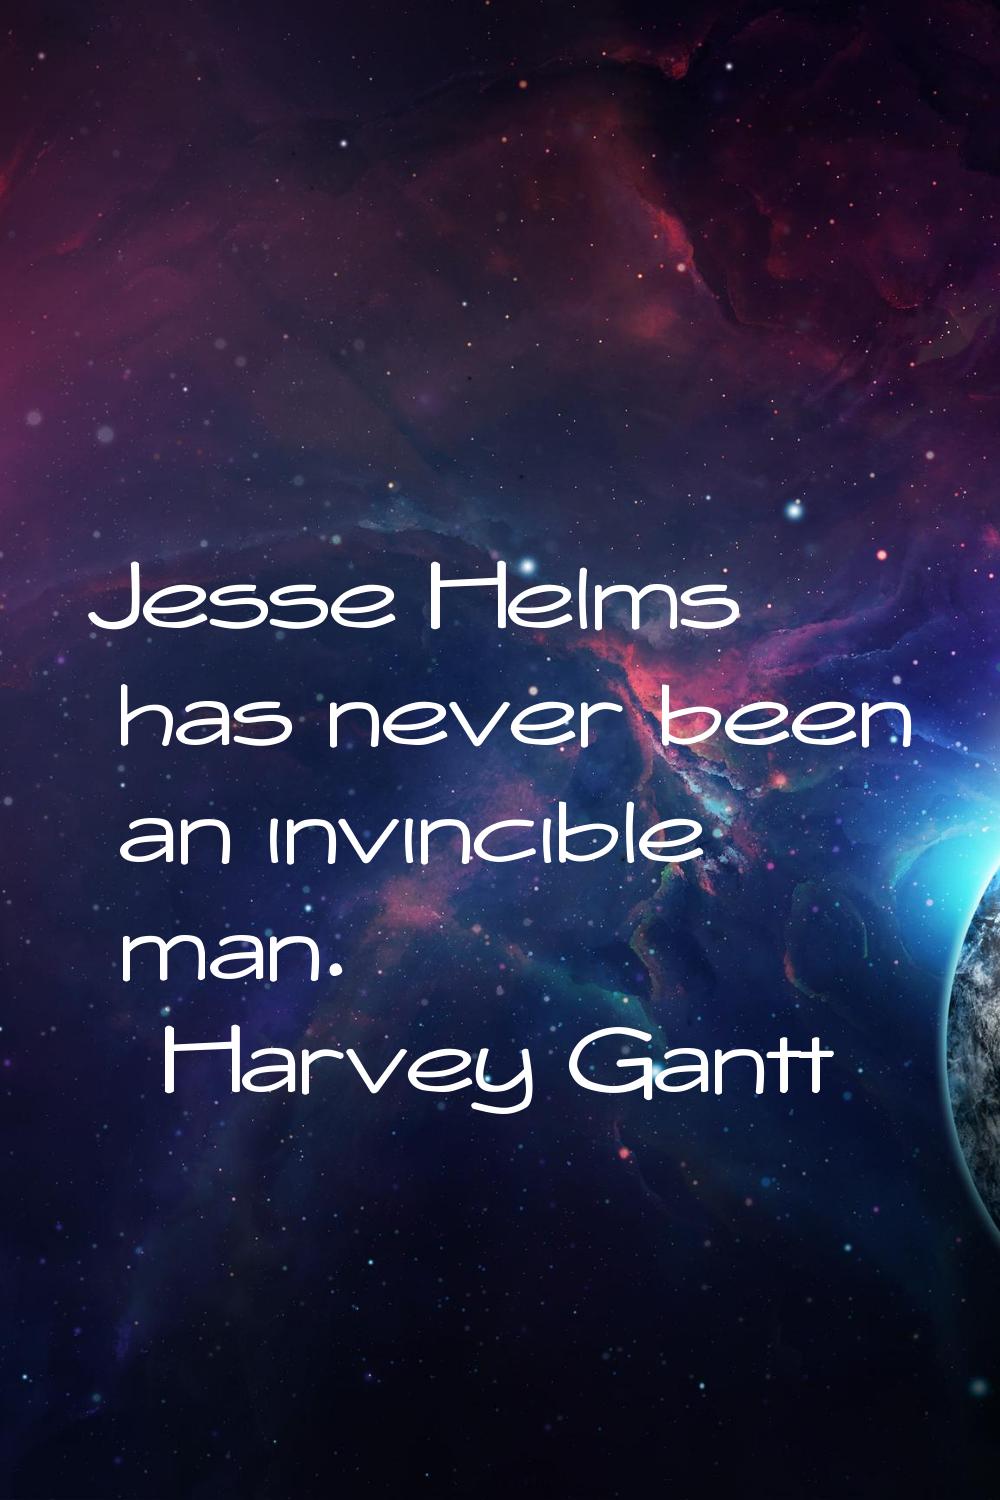 Jesse Helms has never been an invincible man.